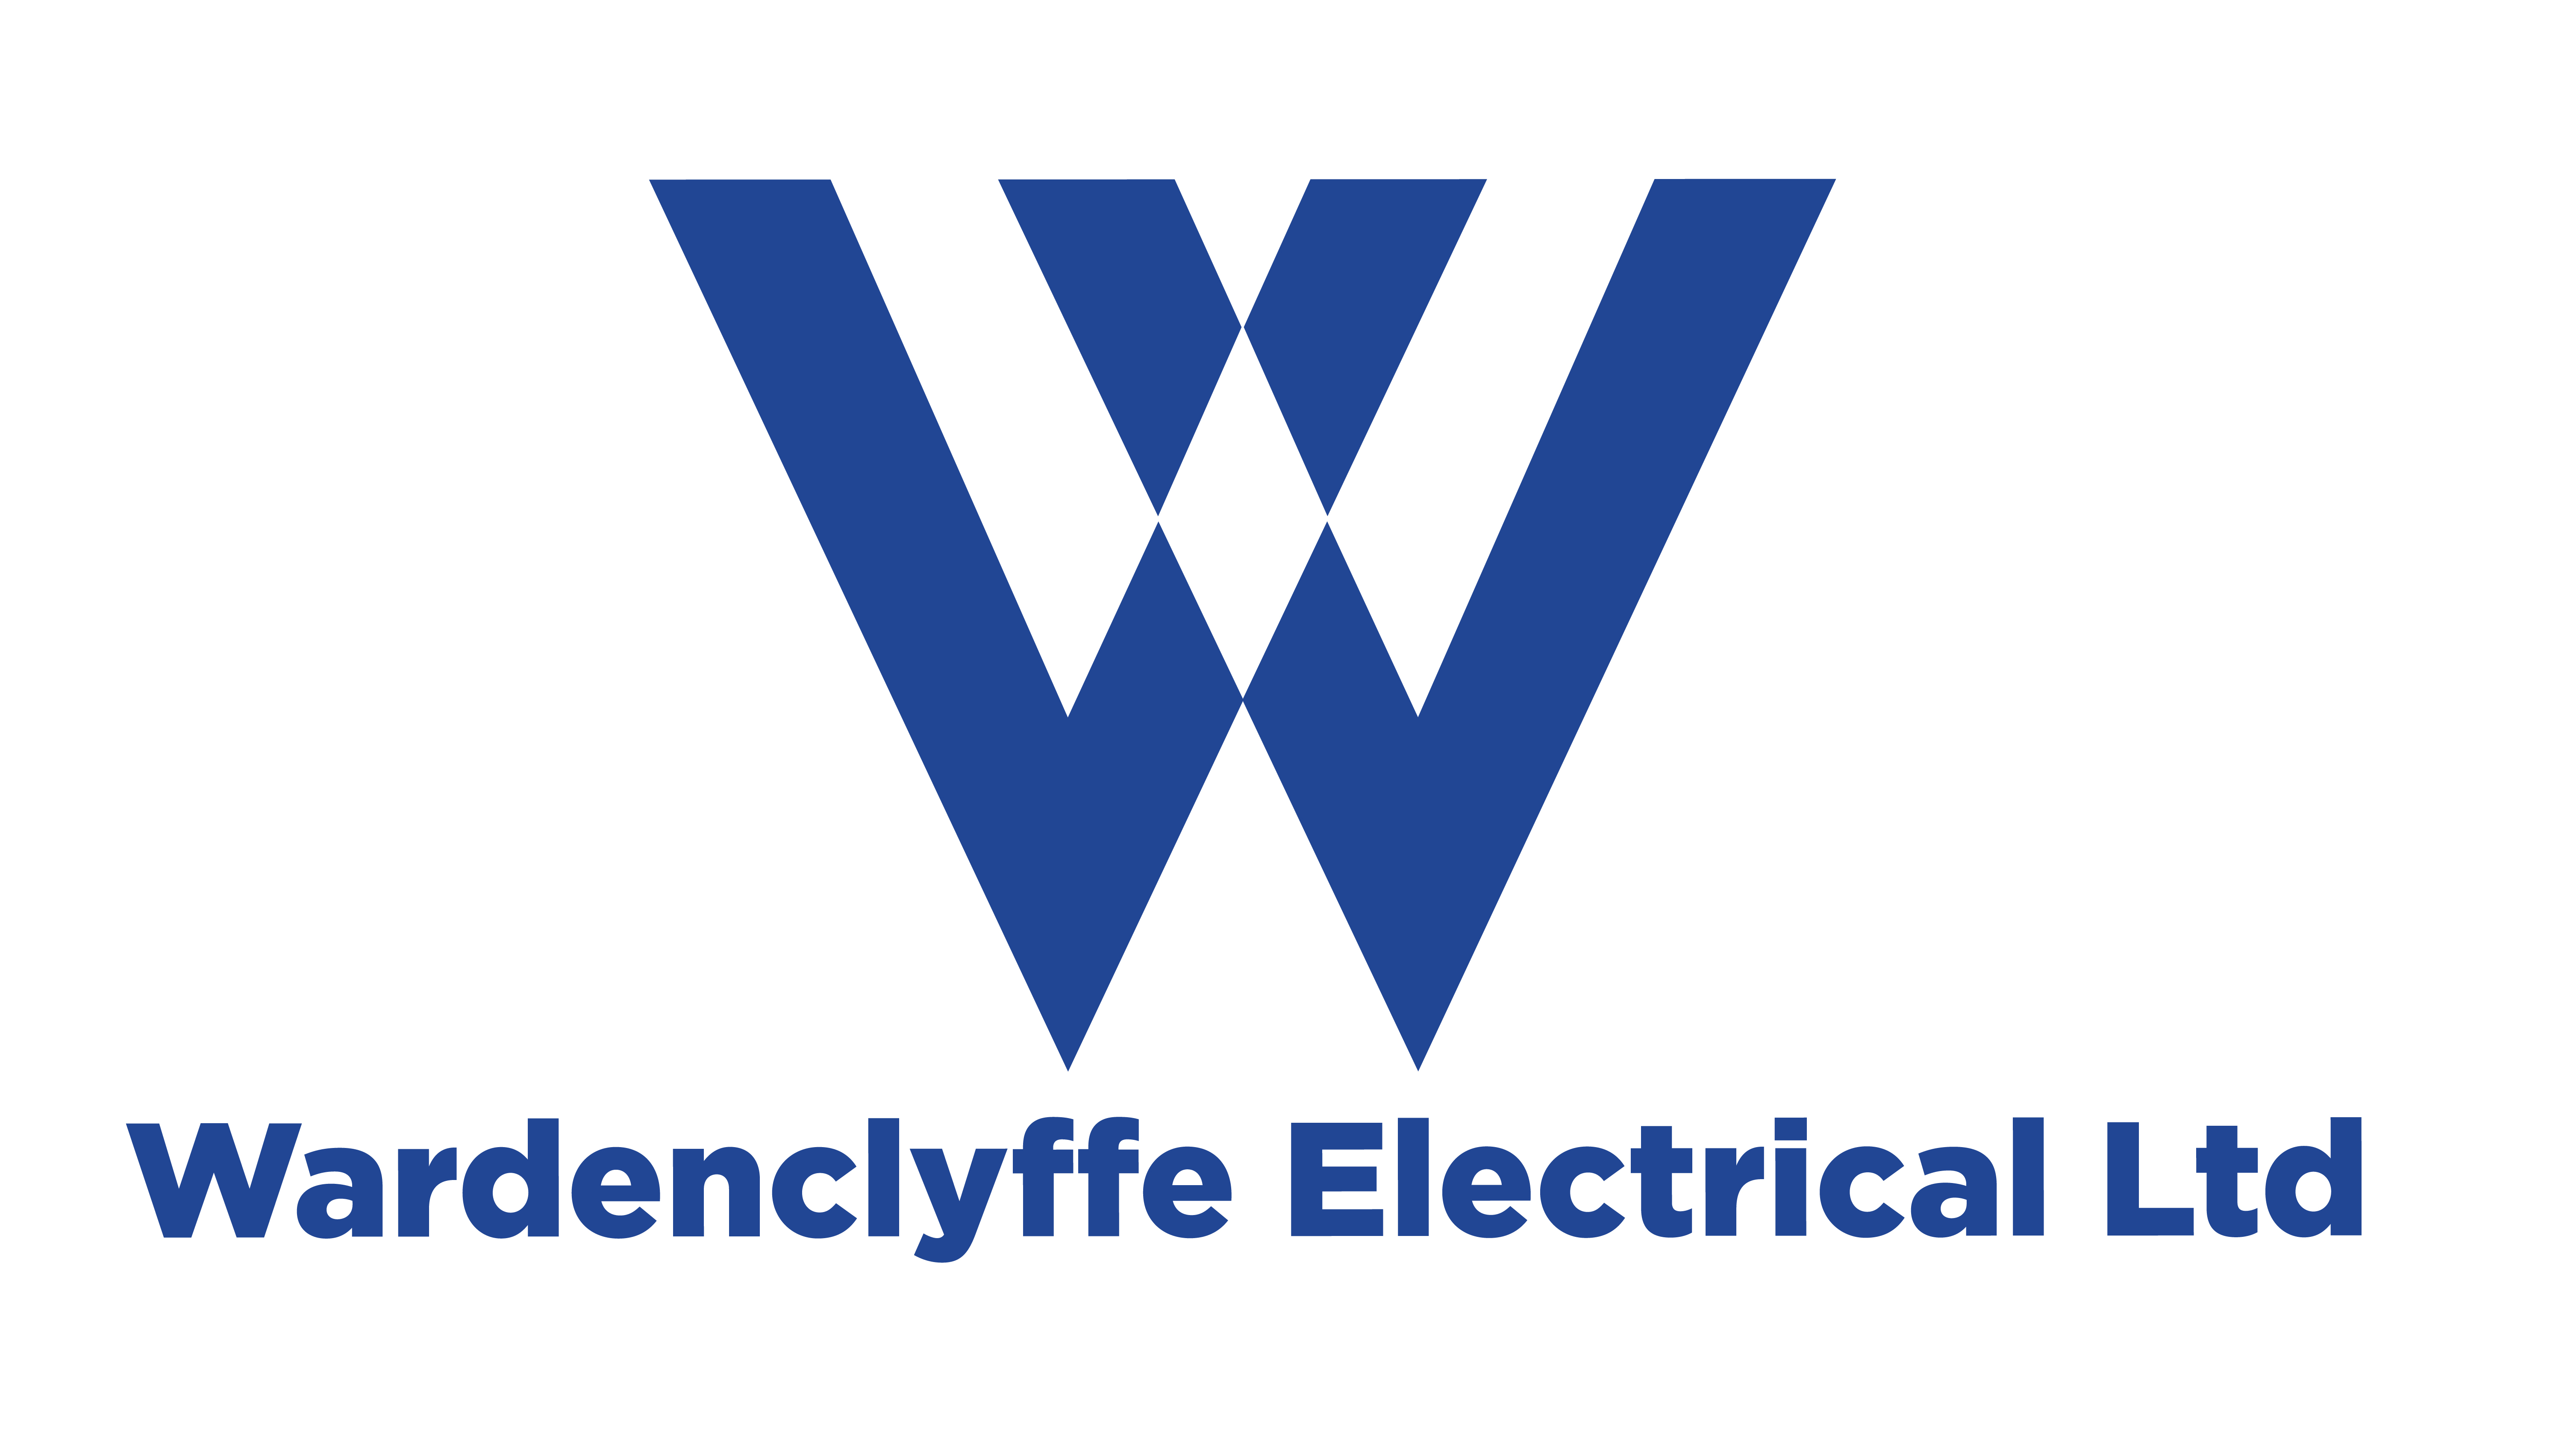 Wardenclyffe Electrical Ltd